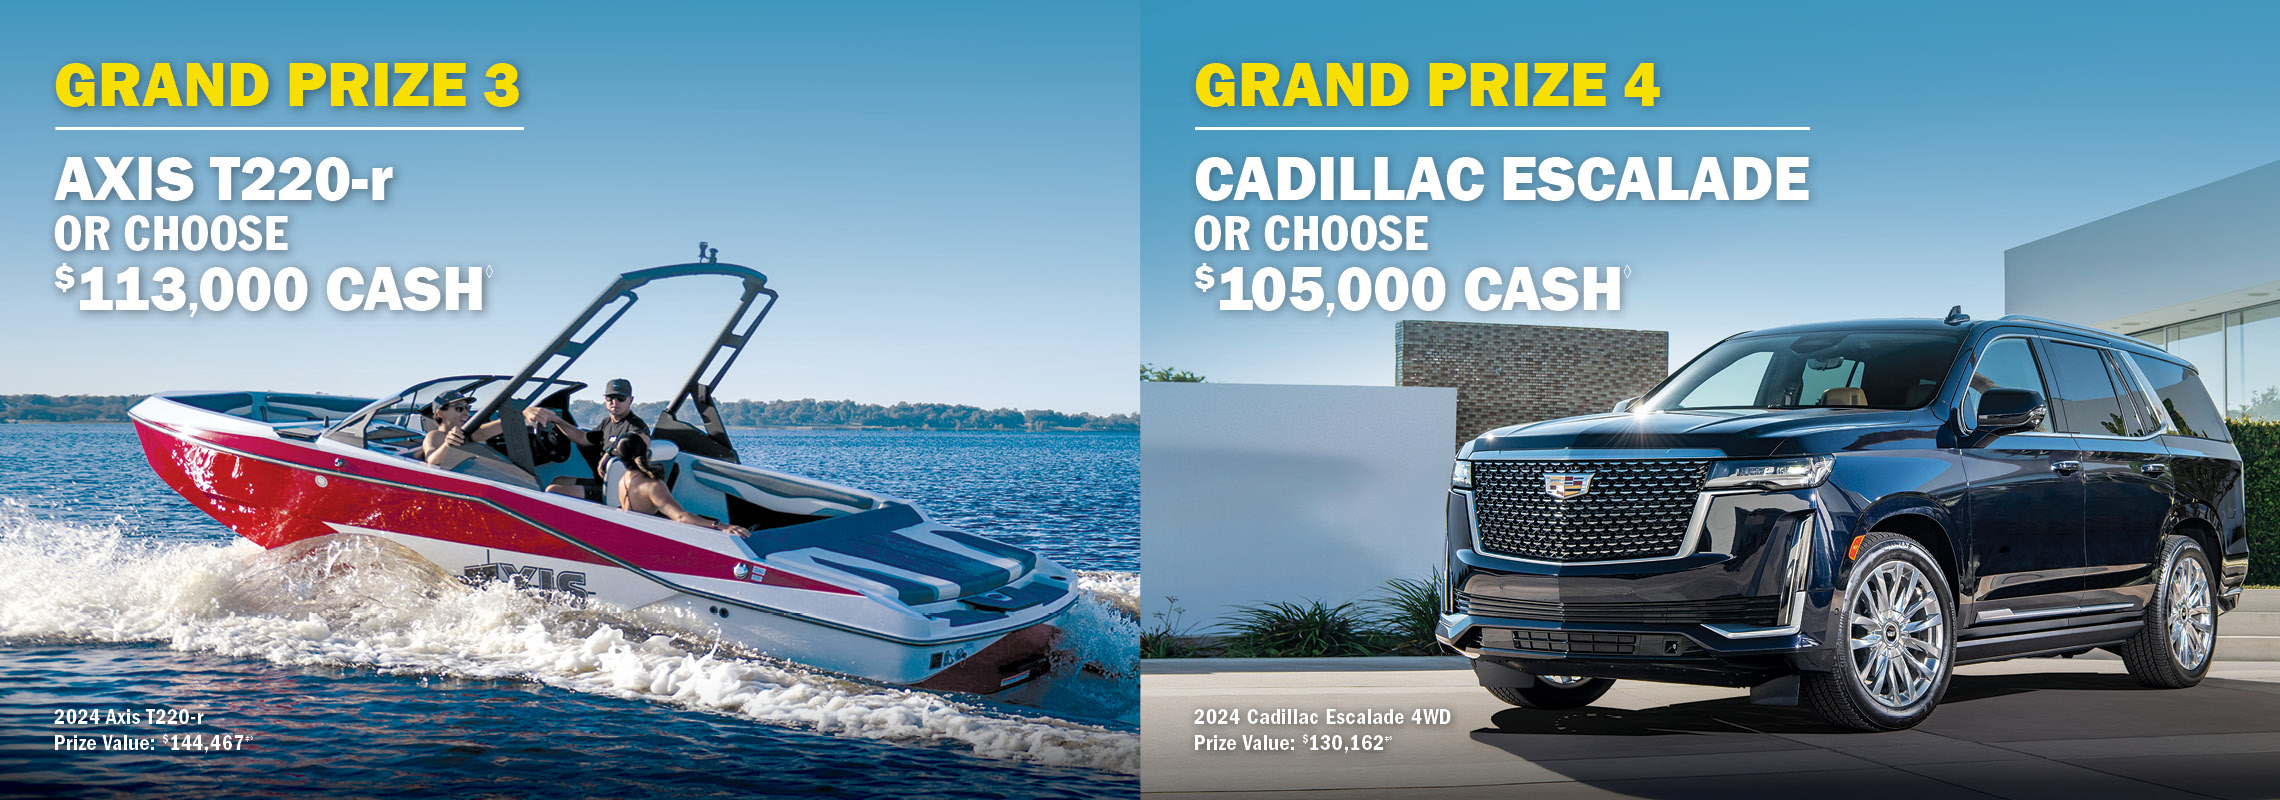 Grand Prize 3 - Malibu Wakesetter or $125,000 cash. Grand Prize 4 - Tesla Model X or $100,000 cash.